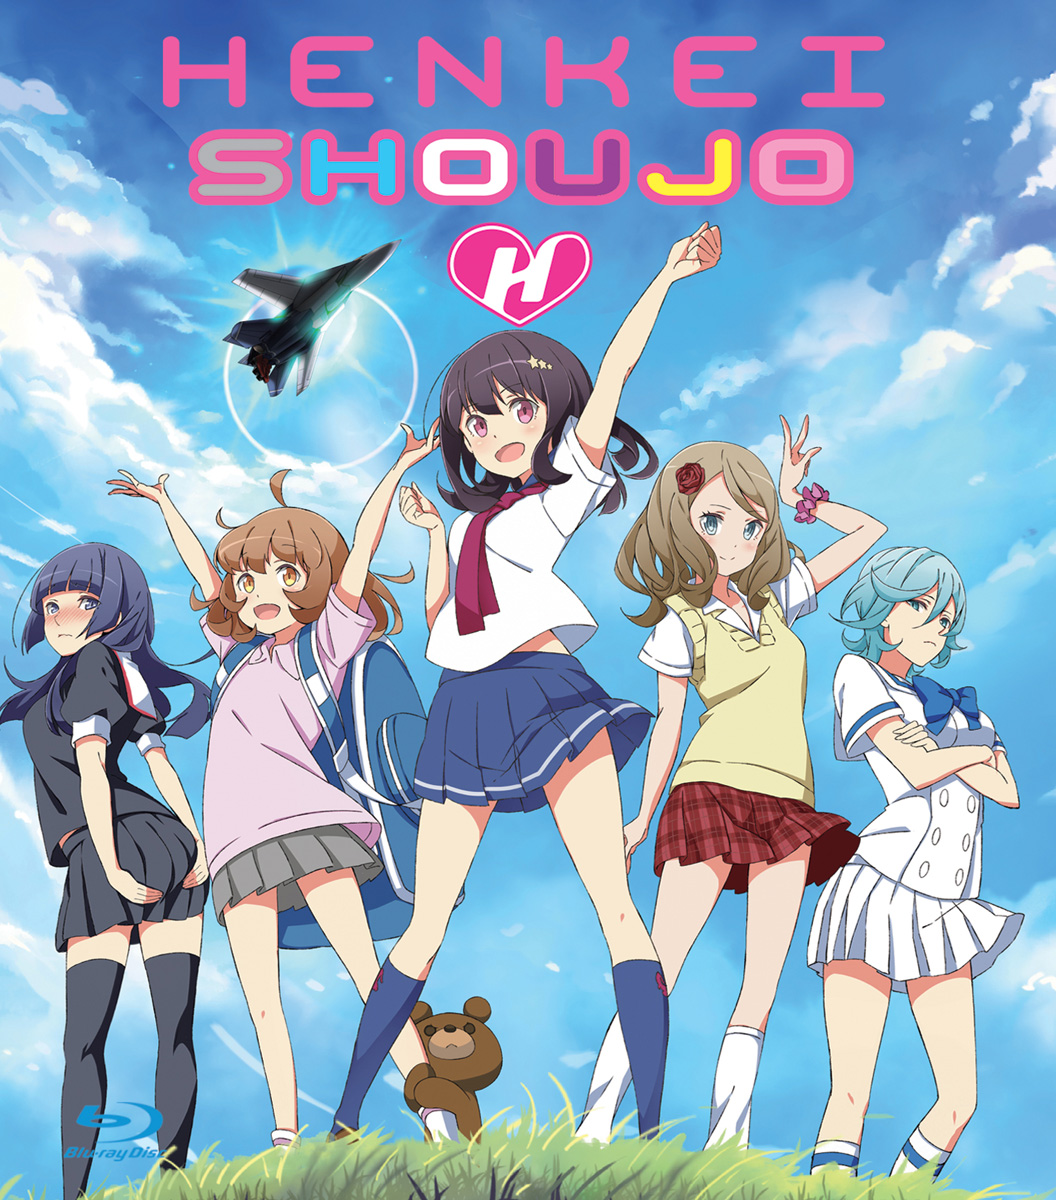 Henkei Shoujo Blu-ray image count 0